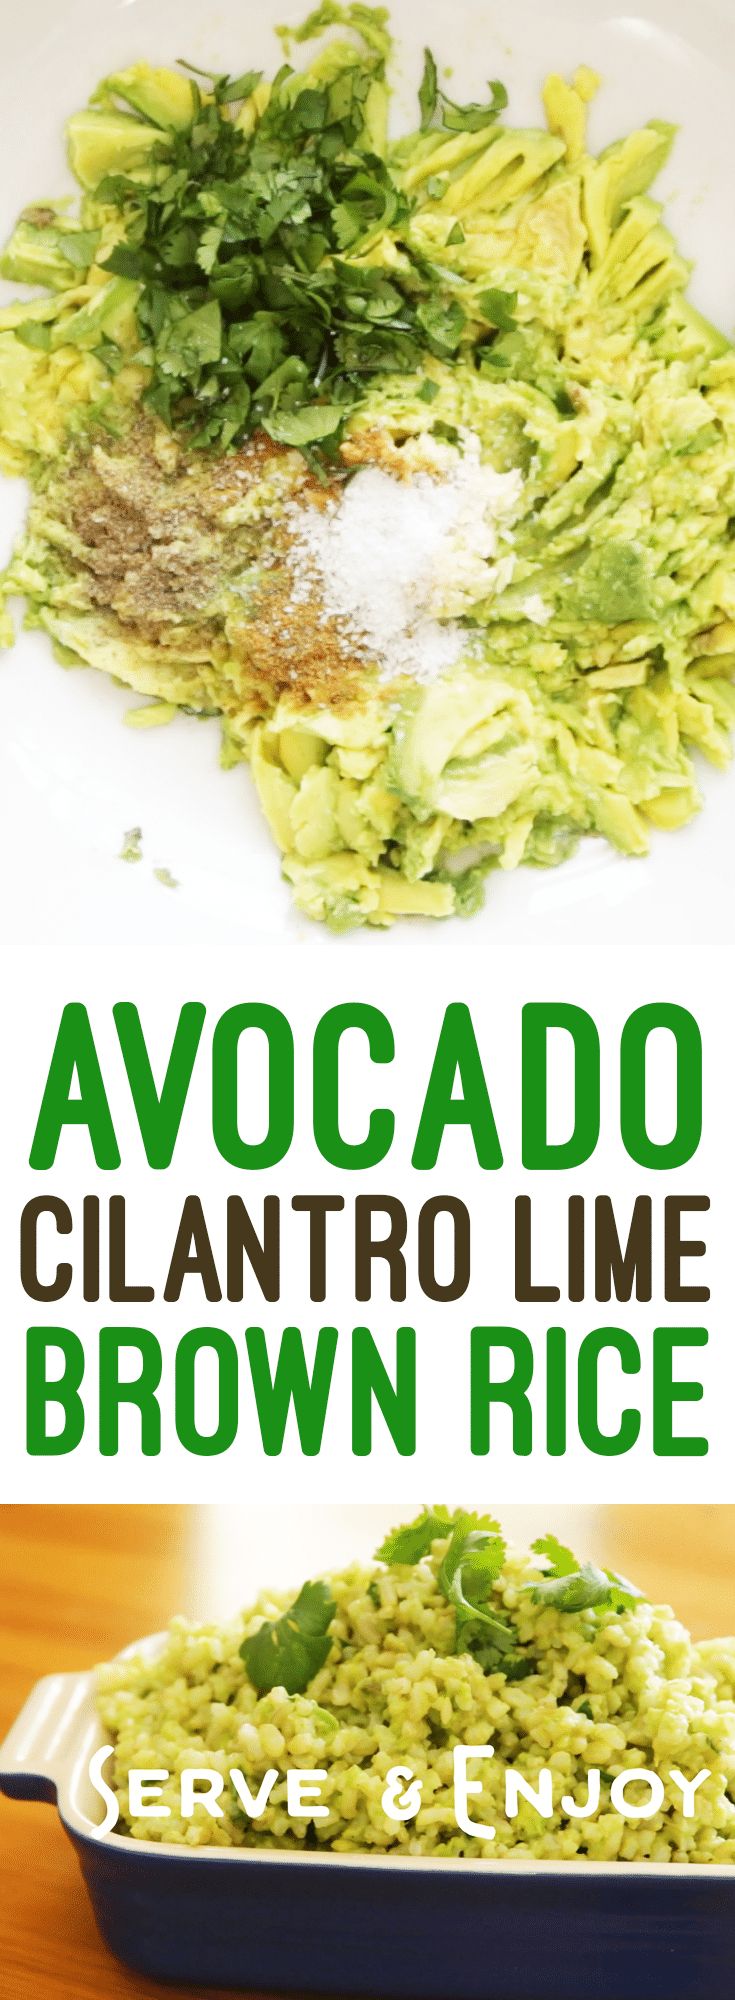 avocado-cilantro-brown-rice